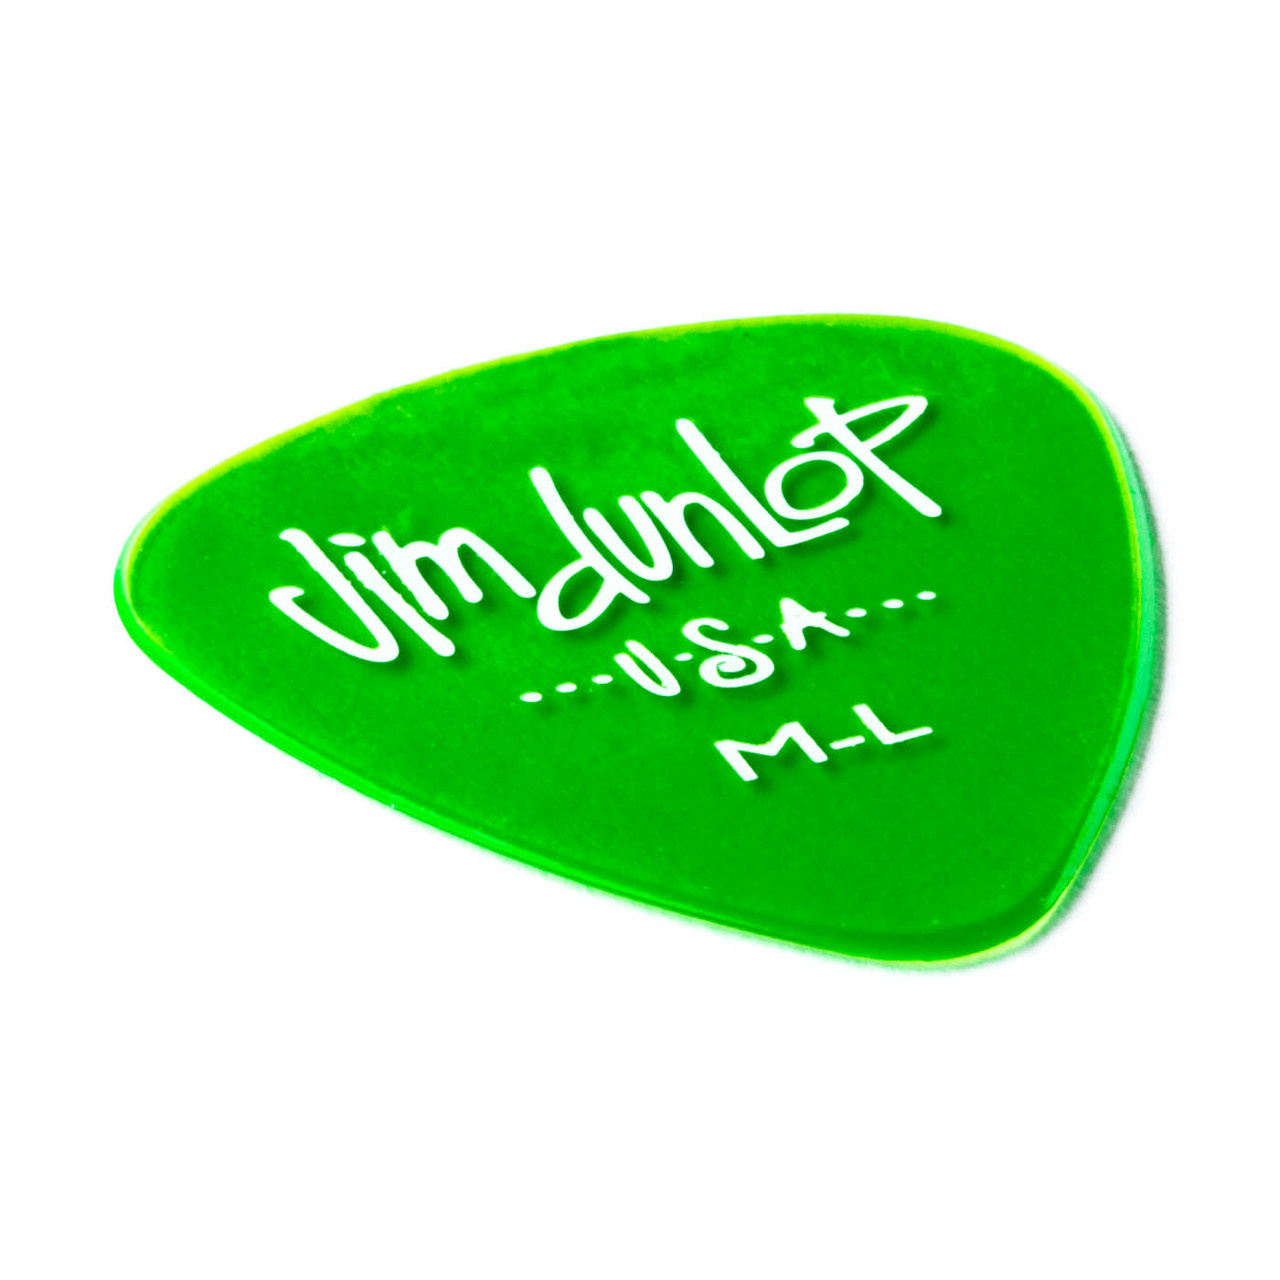 Dunlop Gels Green Medium-Light Picks (12-Pack), Vivid Translucent Polycarbonate